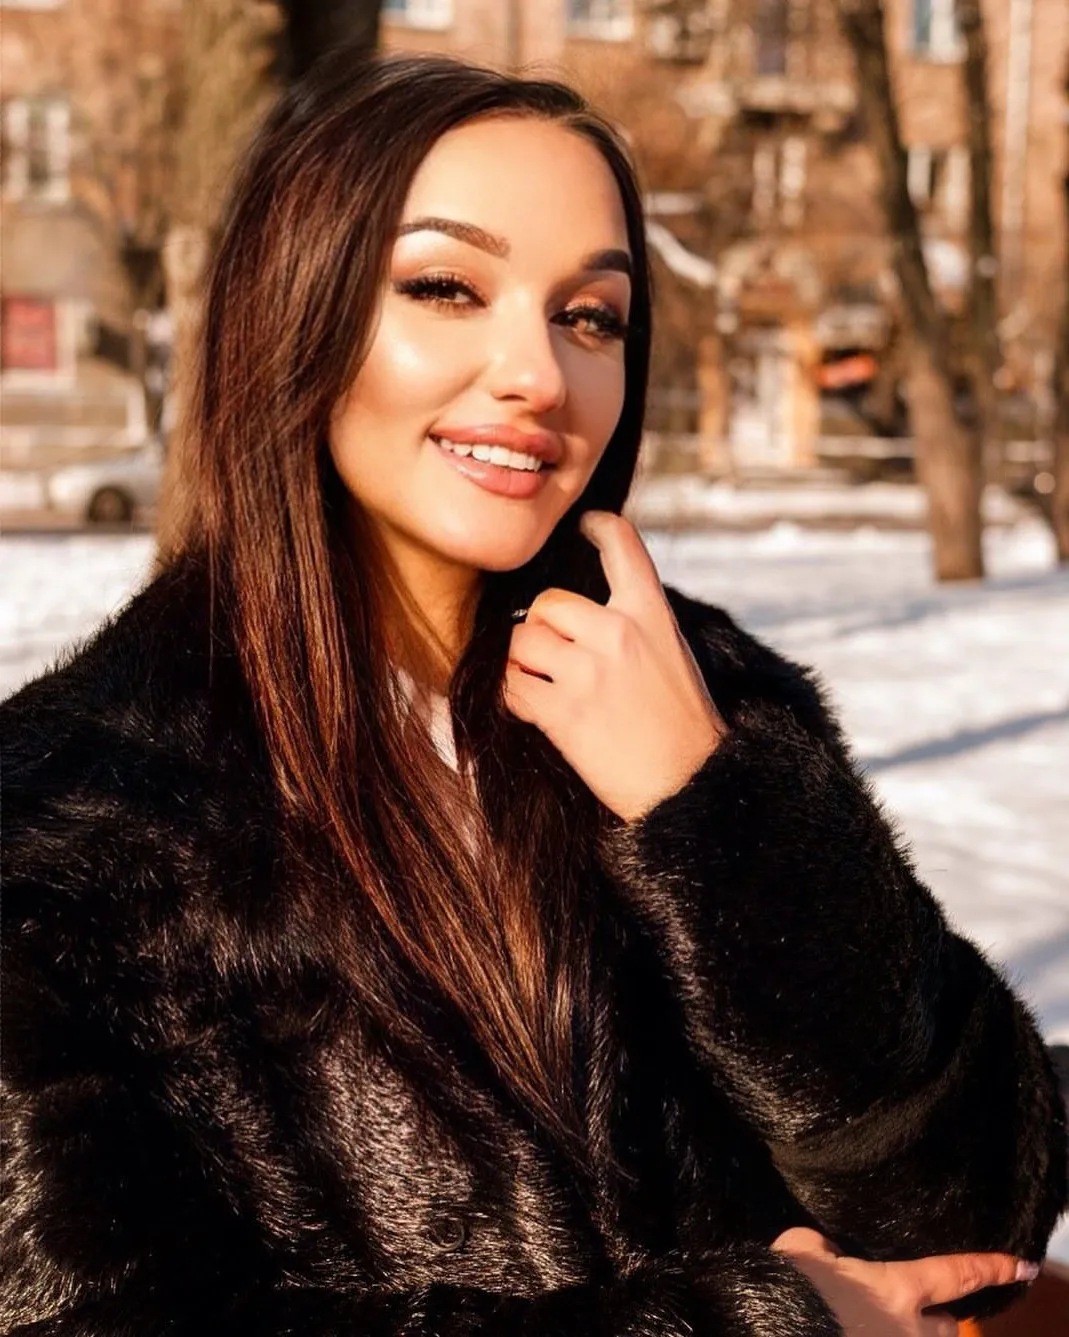 Yulia novias rusas en peru